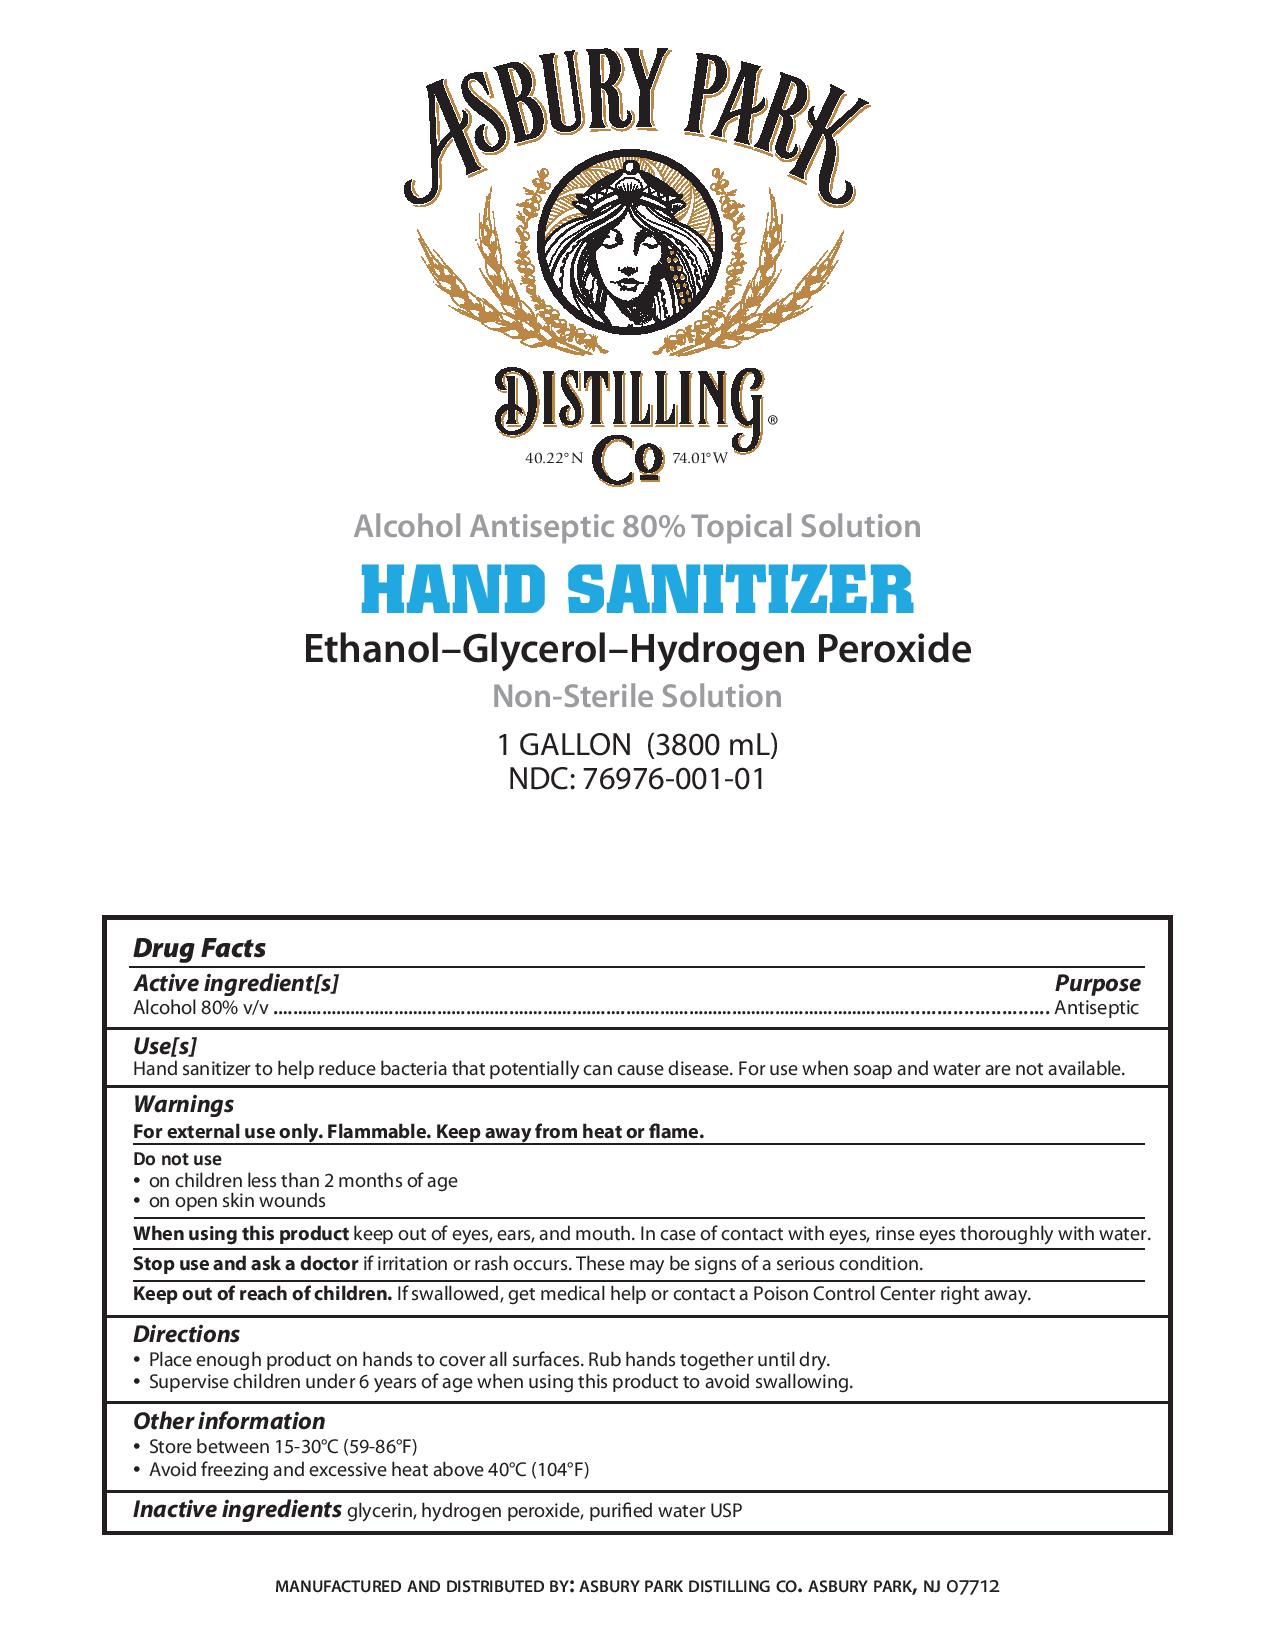 Hand Sanitizer Label 1 gallon.jpg